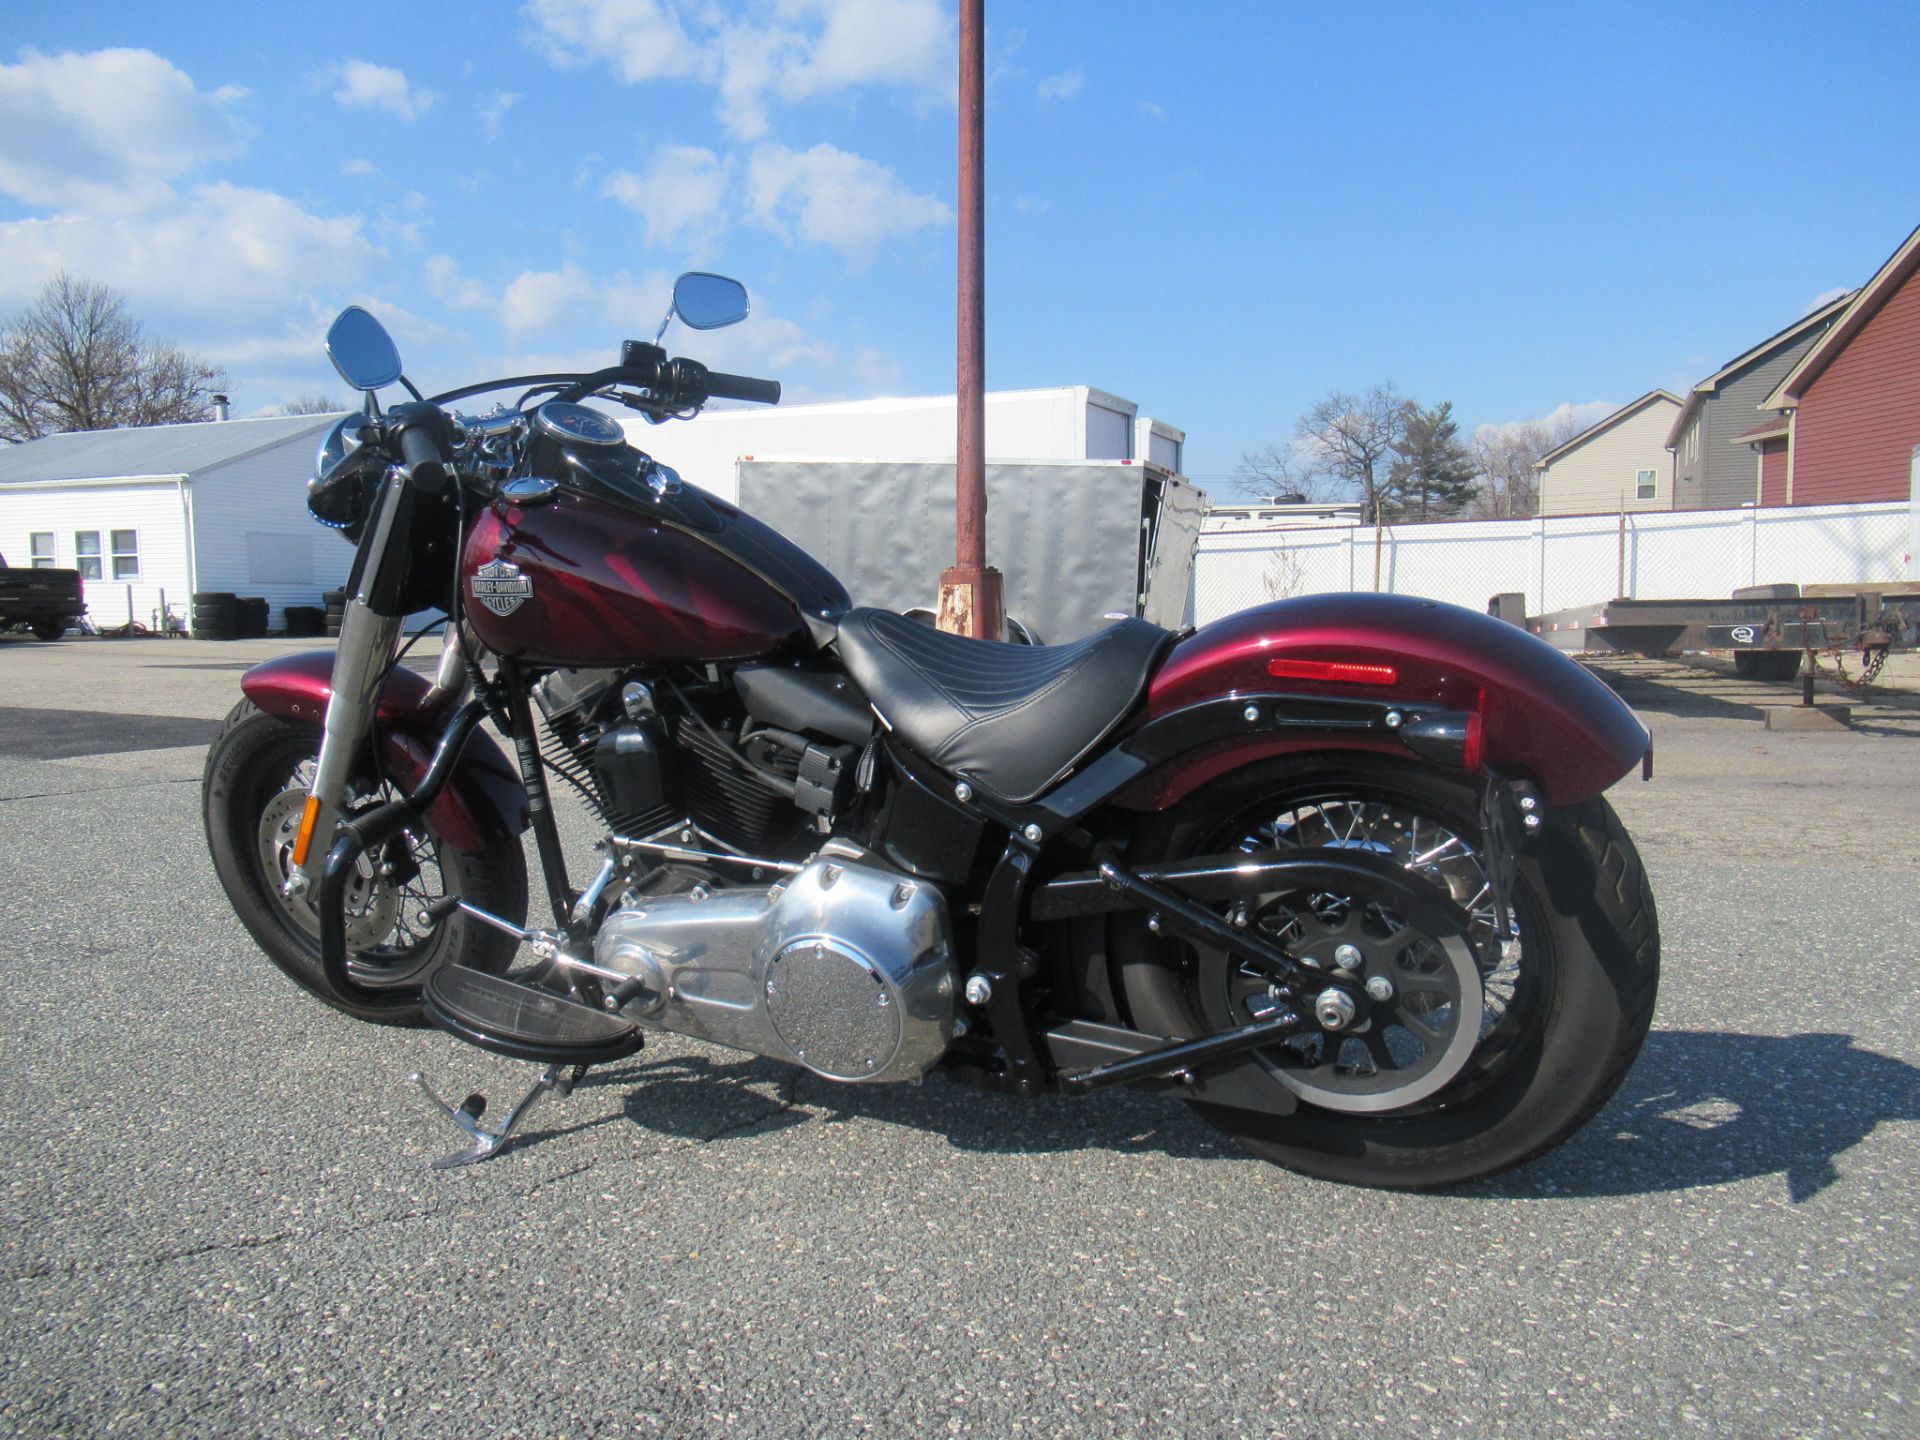 2014 Harley-Davidson Softail Slim® in Springfield, Massachusetts - Photo 5